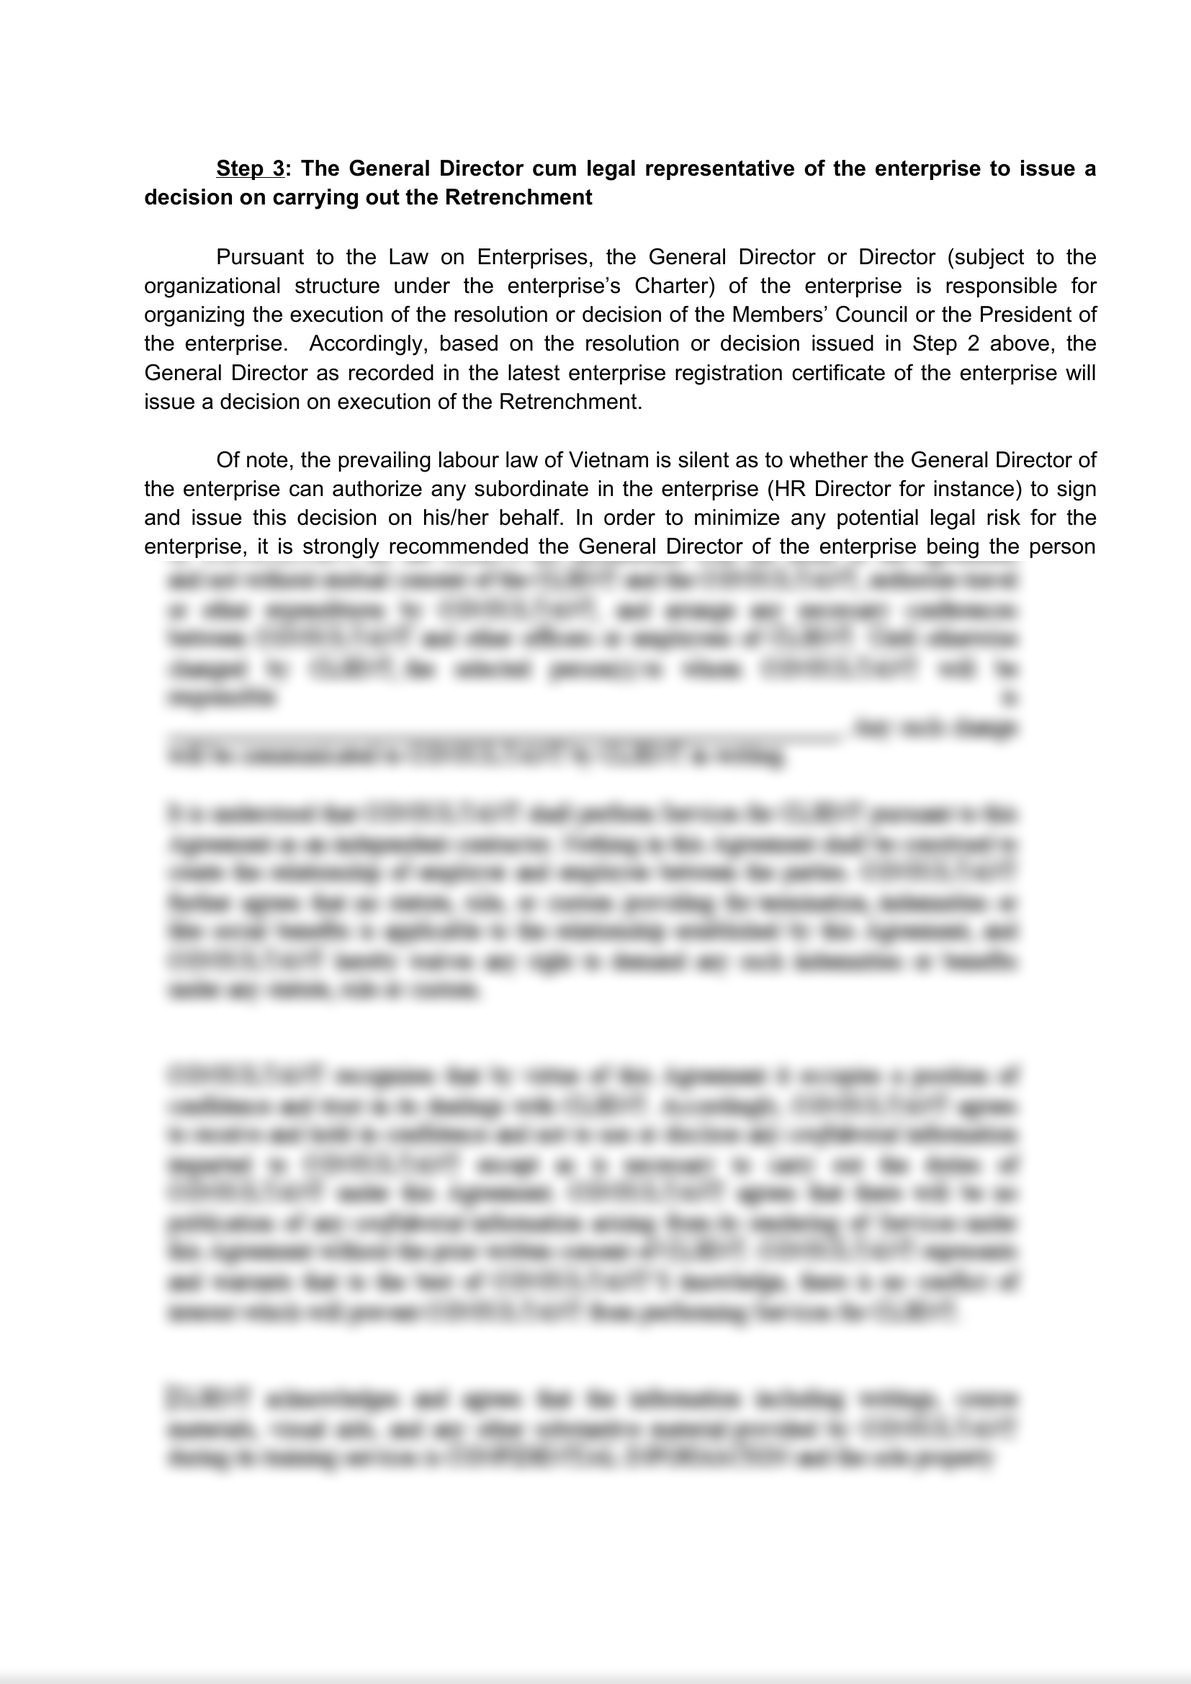 Legal procedural and notable for labour retrenchment of enterprises under labour laws of Vietnam-1